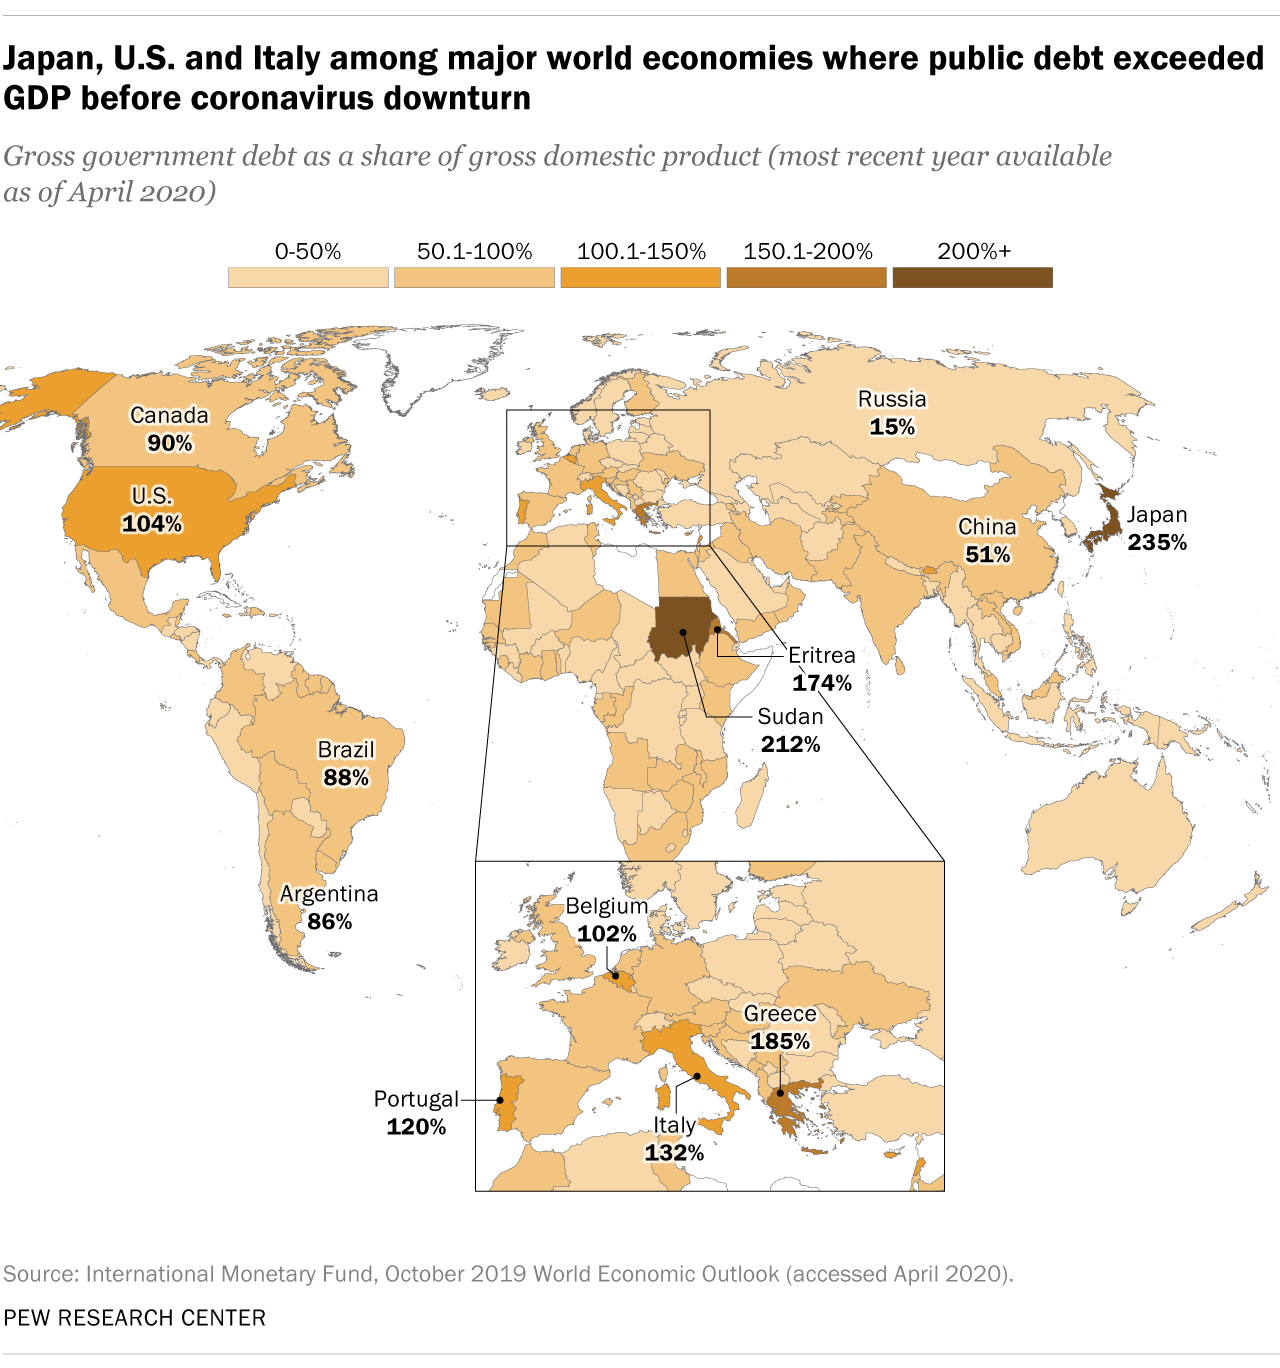 Japan, U.S. and Italy among major world economies where public debt exceeded GDP before coronavirus downturn